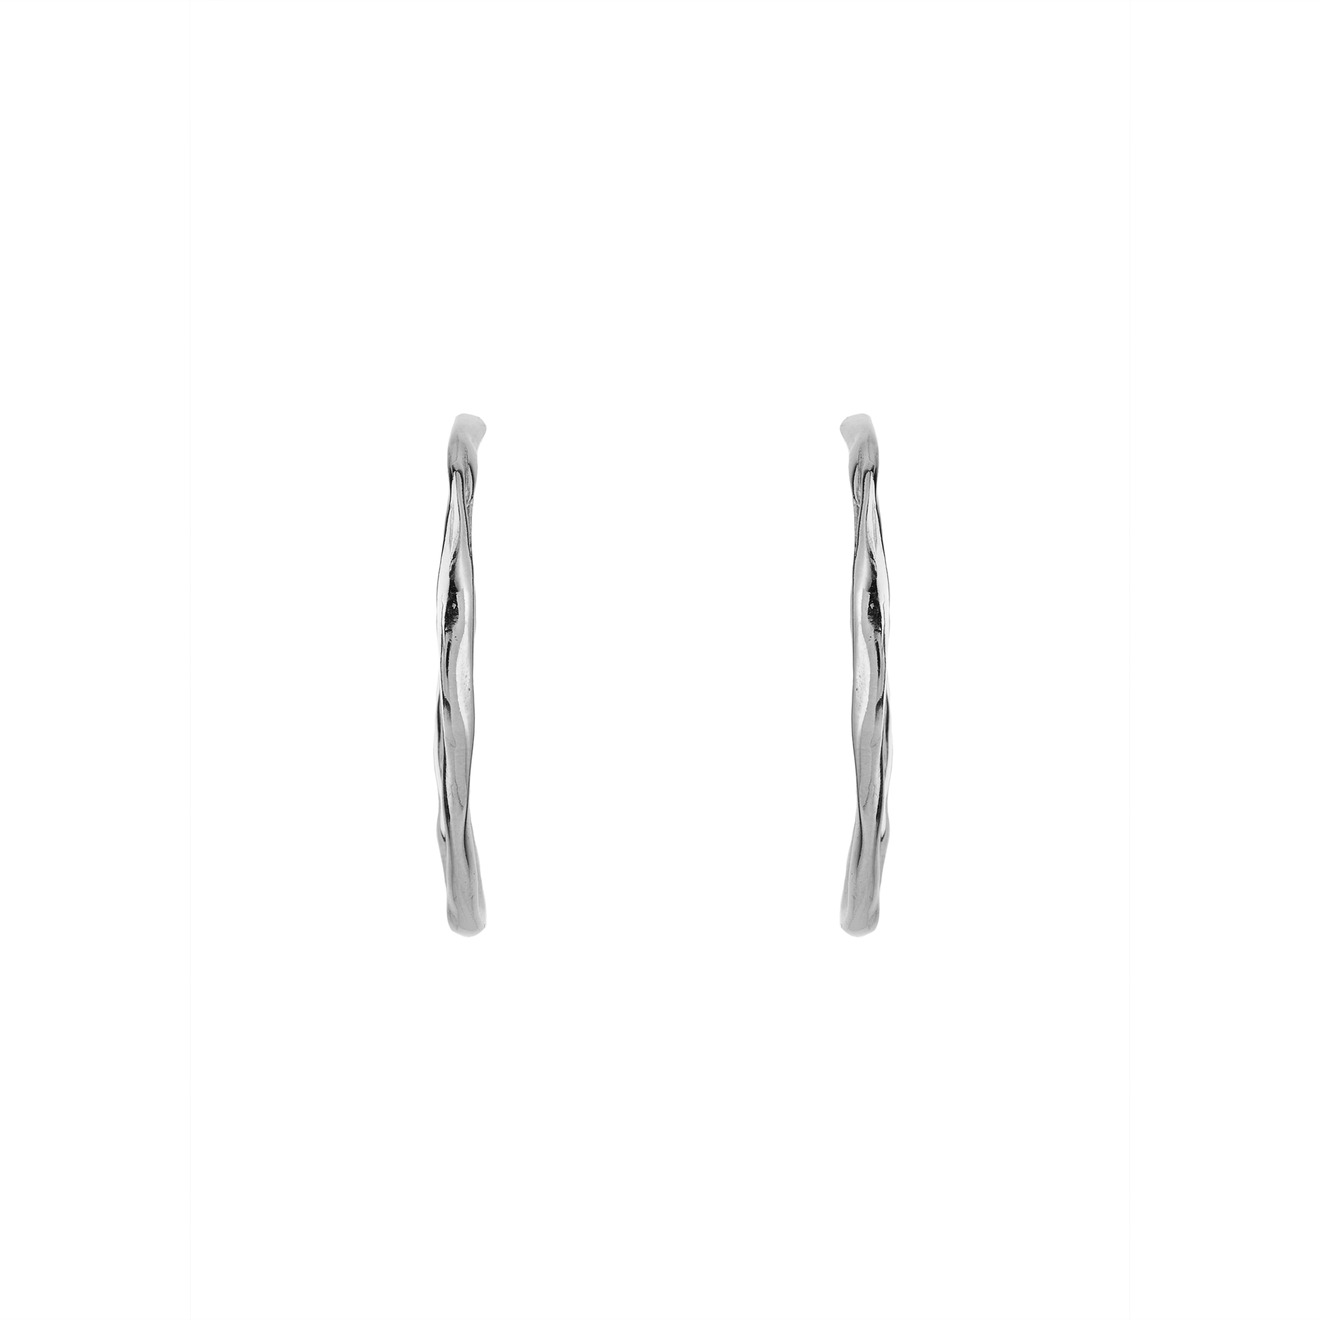 Ringstone Малые серебристые серьги-кольца lisa smith серебристые малые крученые серьги